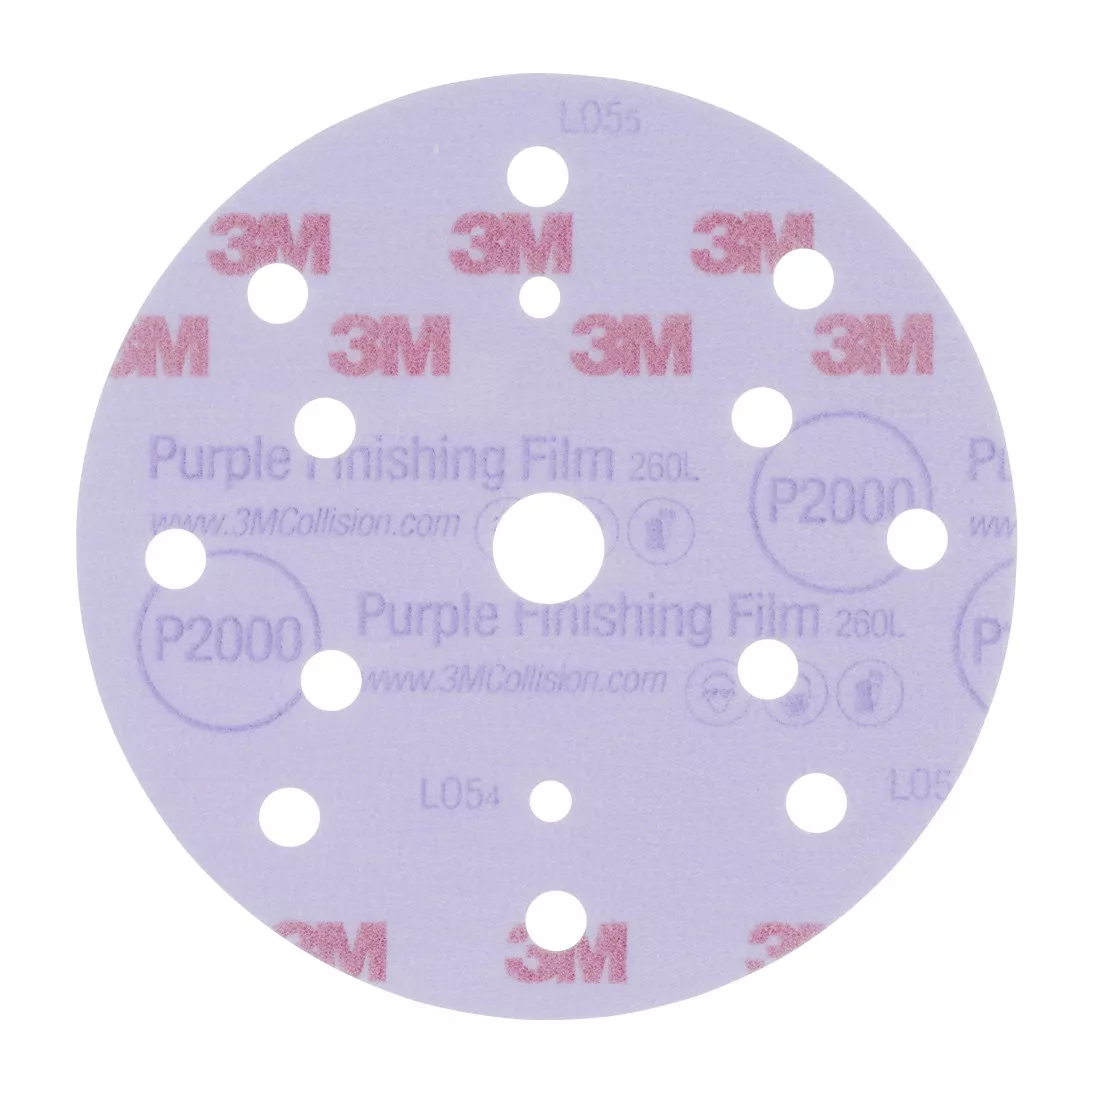 3M™ Hookit™ Finishing Film Abrasive Disc 260L, 51304, 6 in, Dust Free,
P2000, 50 discs per carton, 4 cartons per case